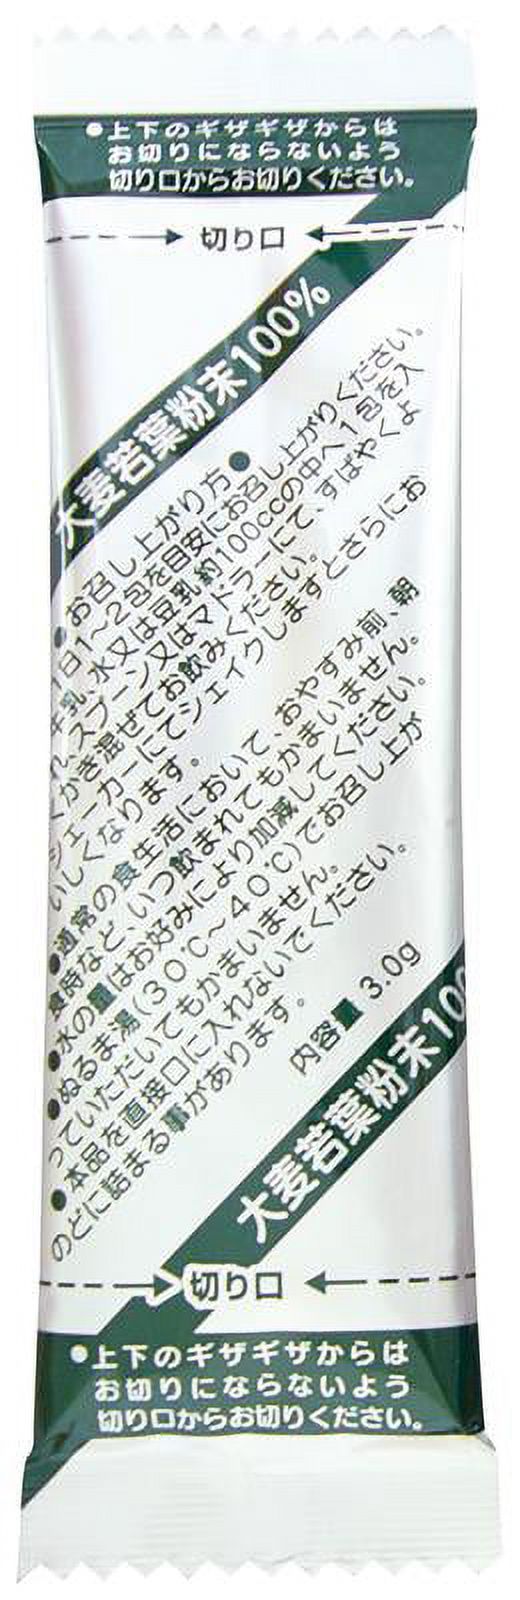 Yamamoto kanpoh 100% young barley grass powder, 44 packs - image 2 of 4